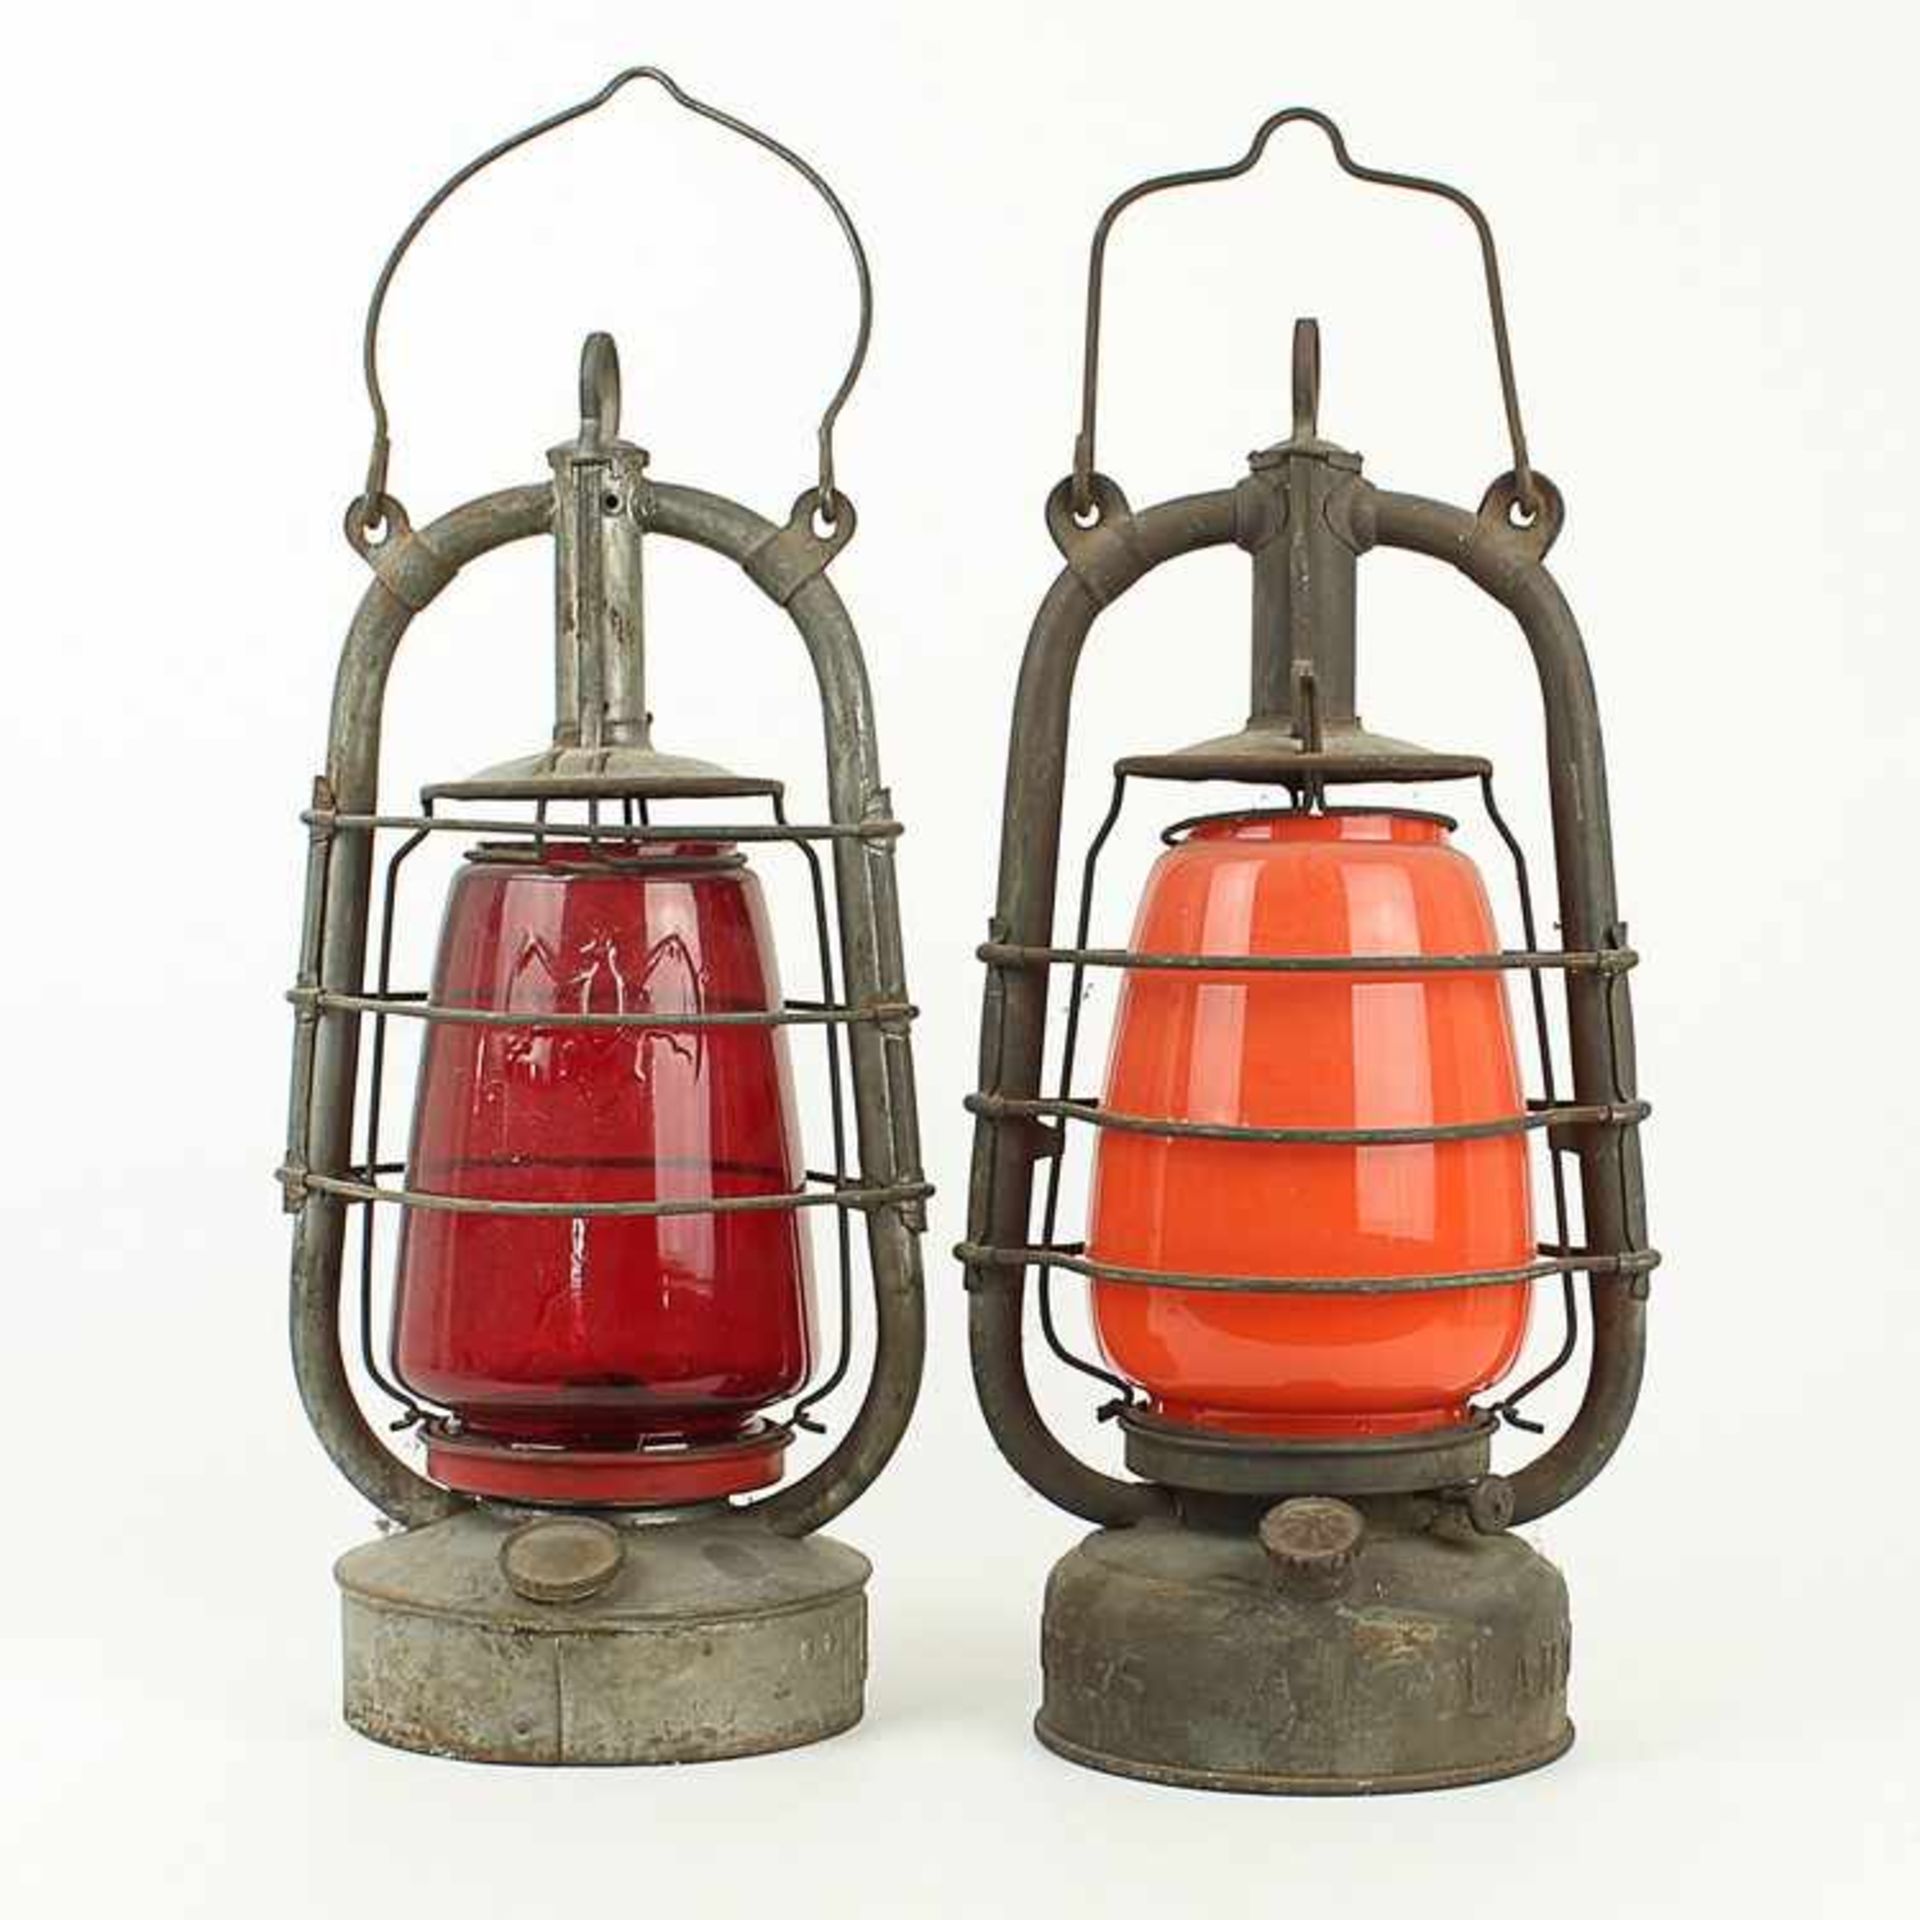 Öllampen2 St., Warnlampen, Metall, Glas, orange u. rot, "Landesbauamt Weissenfels", "BAT Brand",